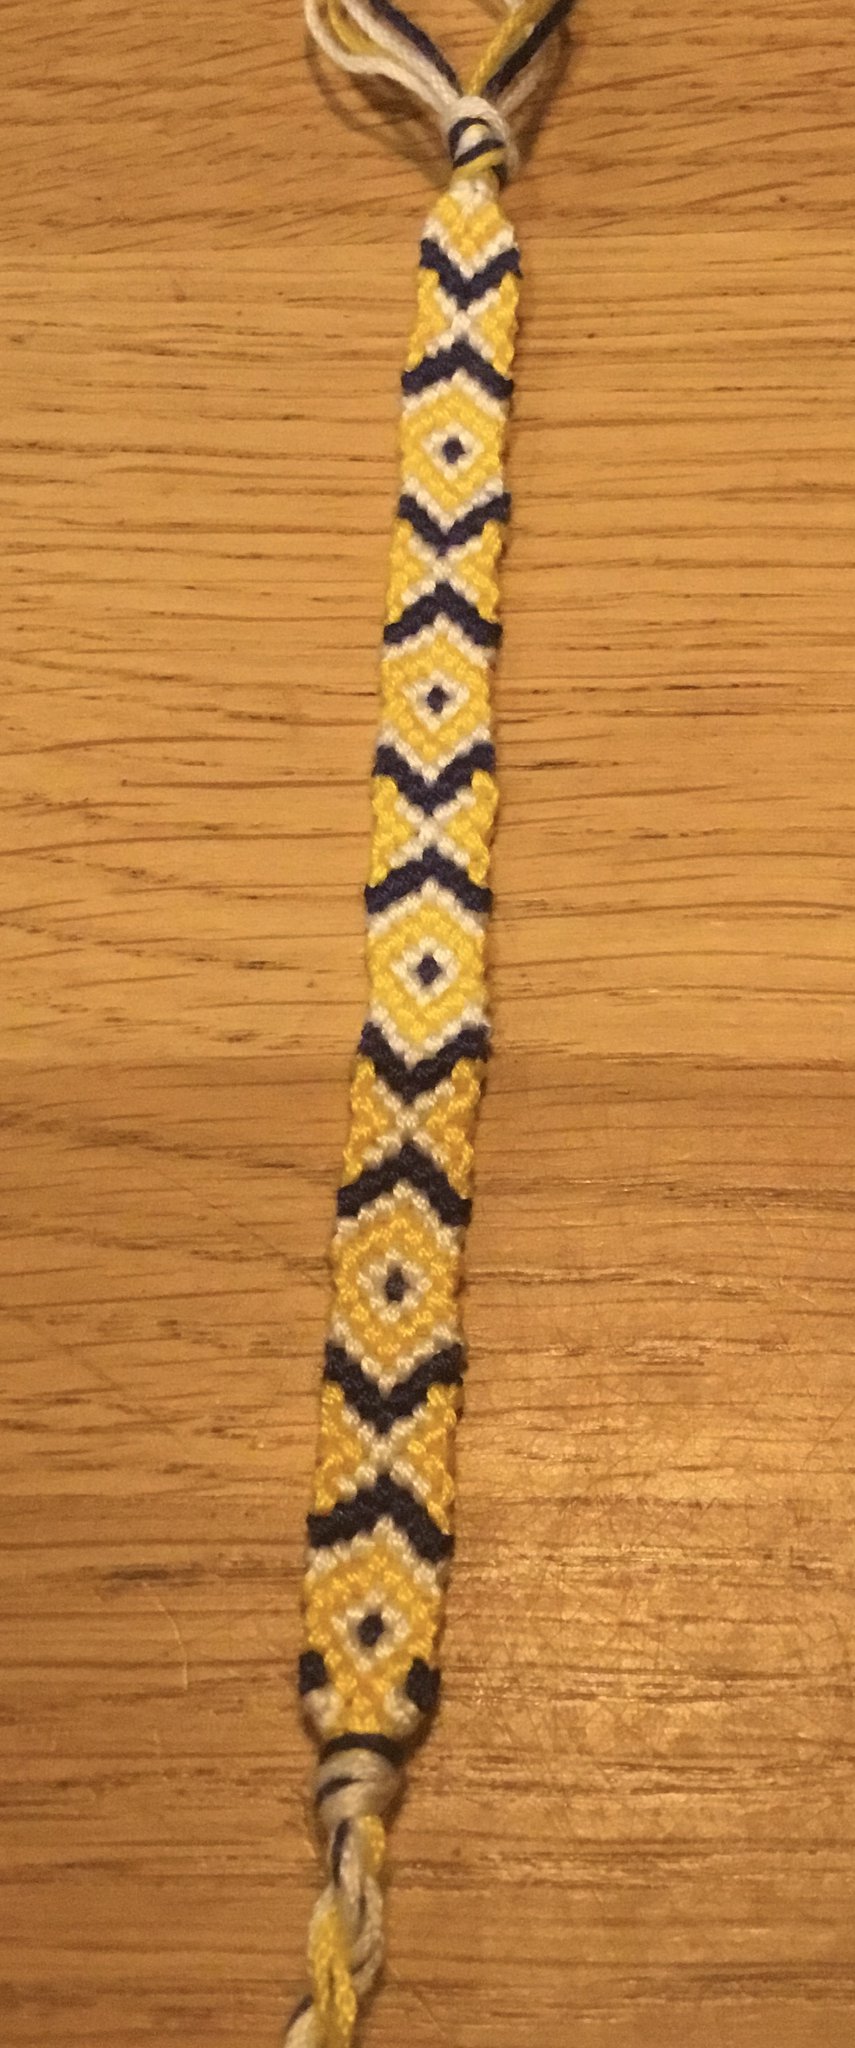 Free crochet friendship bracelet patterns - Gathered